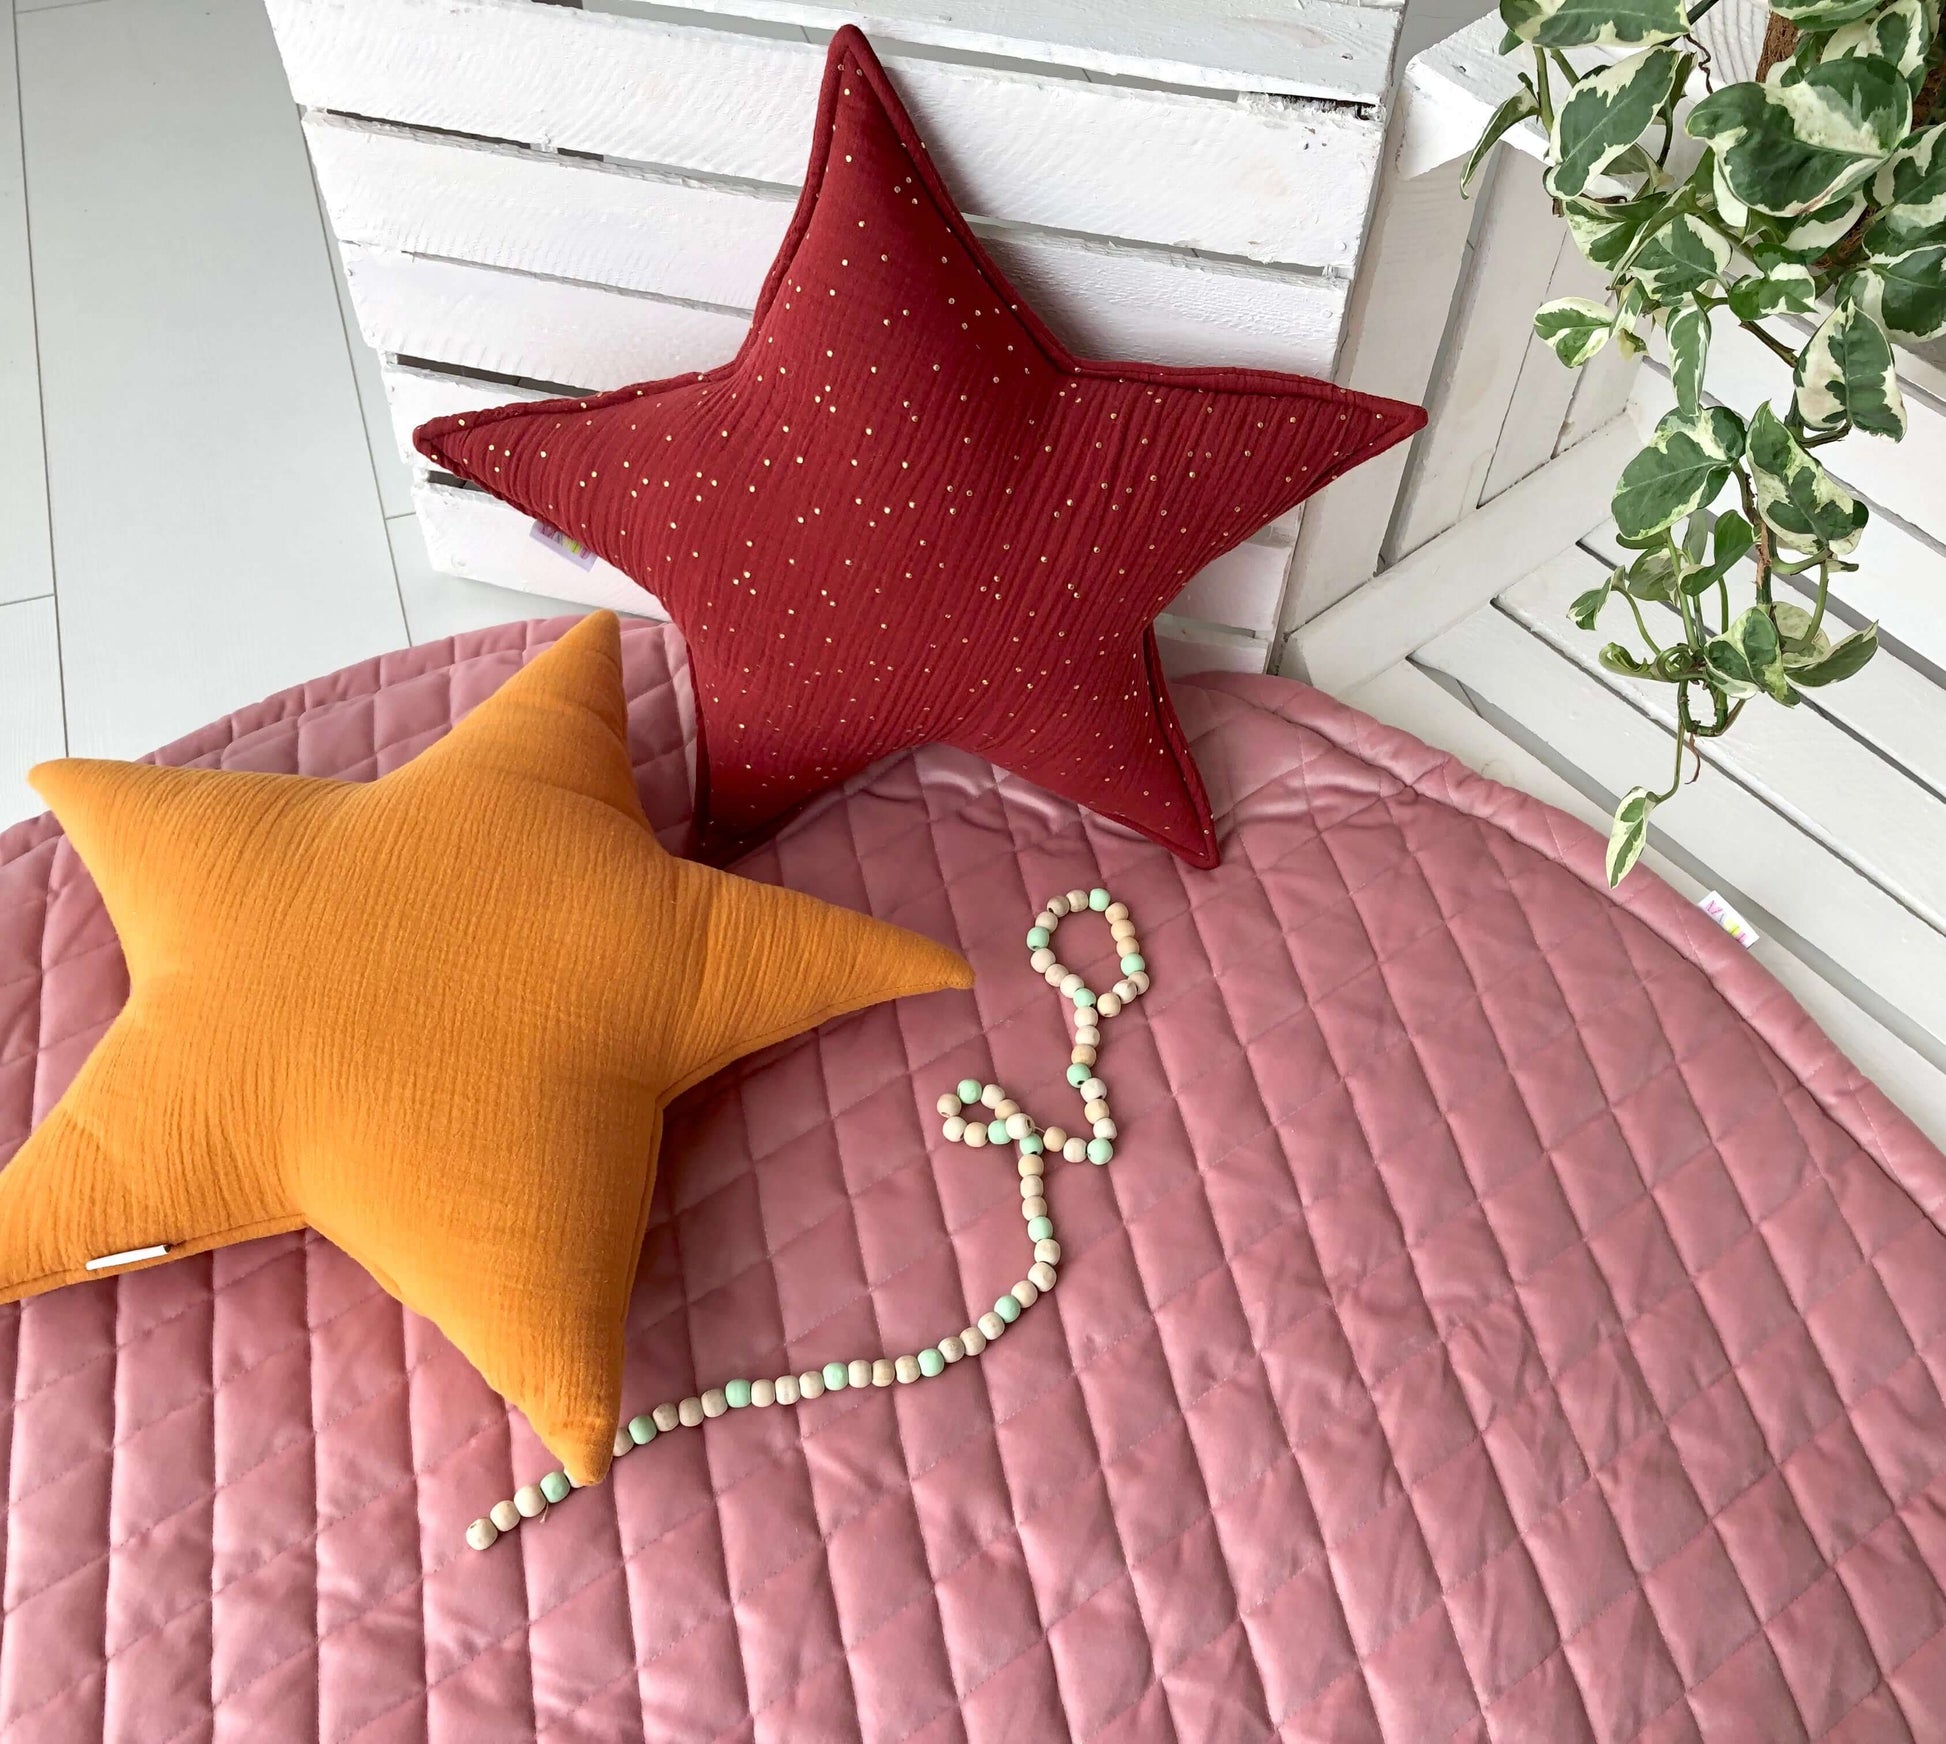 Matuu - Red rust star with gold dots  - double gauze pillow, terakota pillow